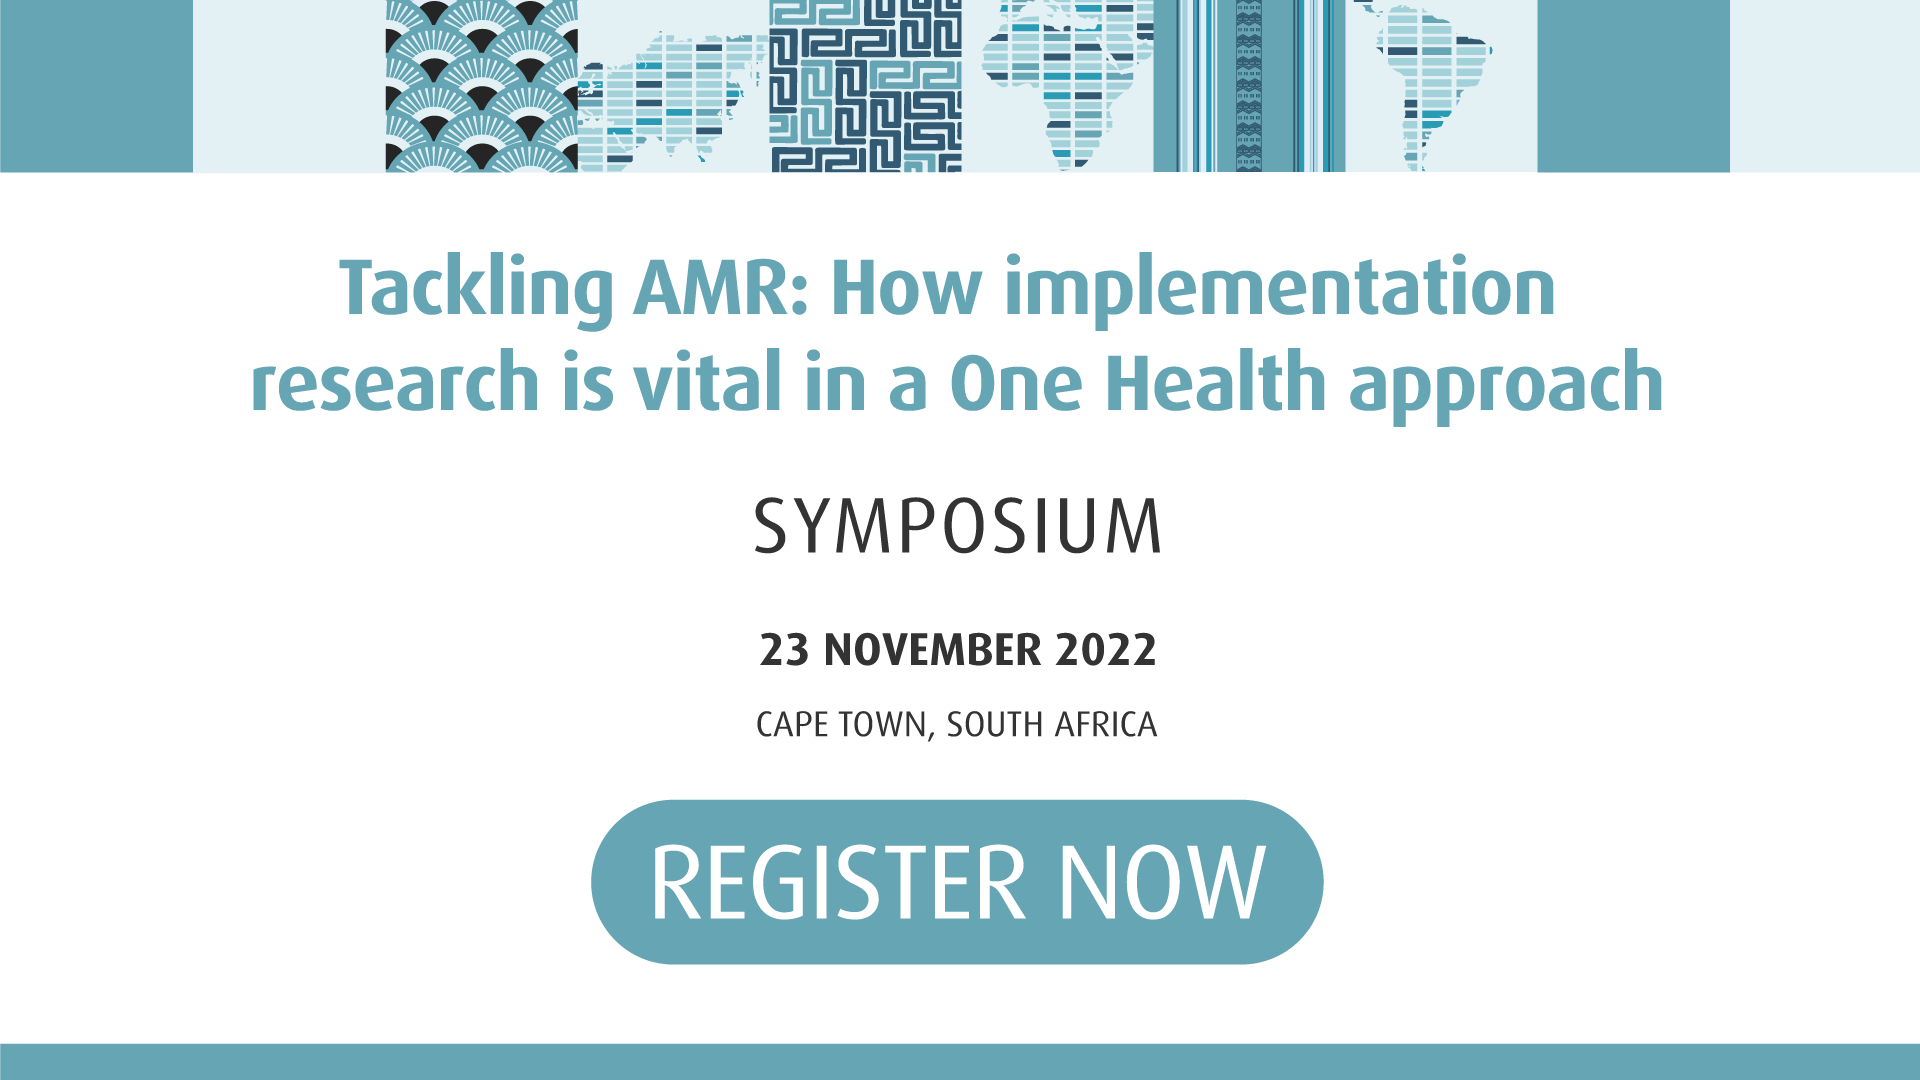 AMR Symposium